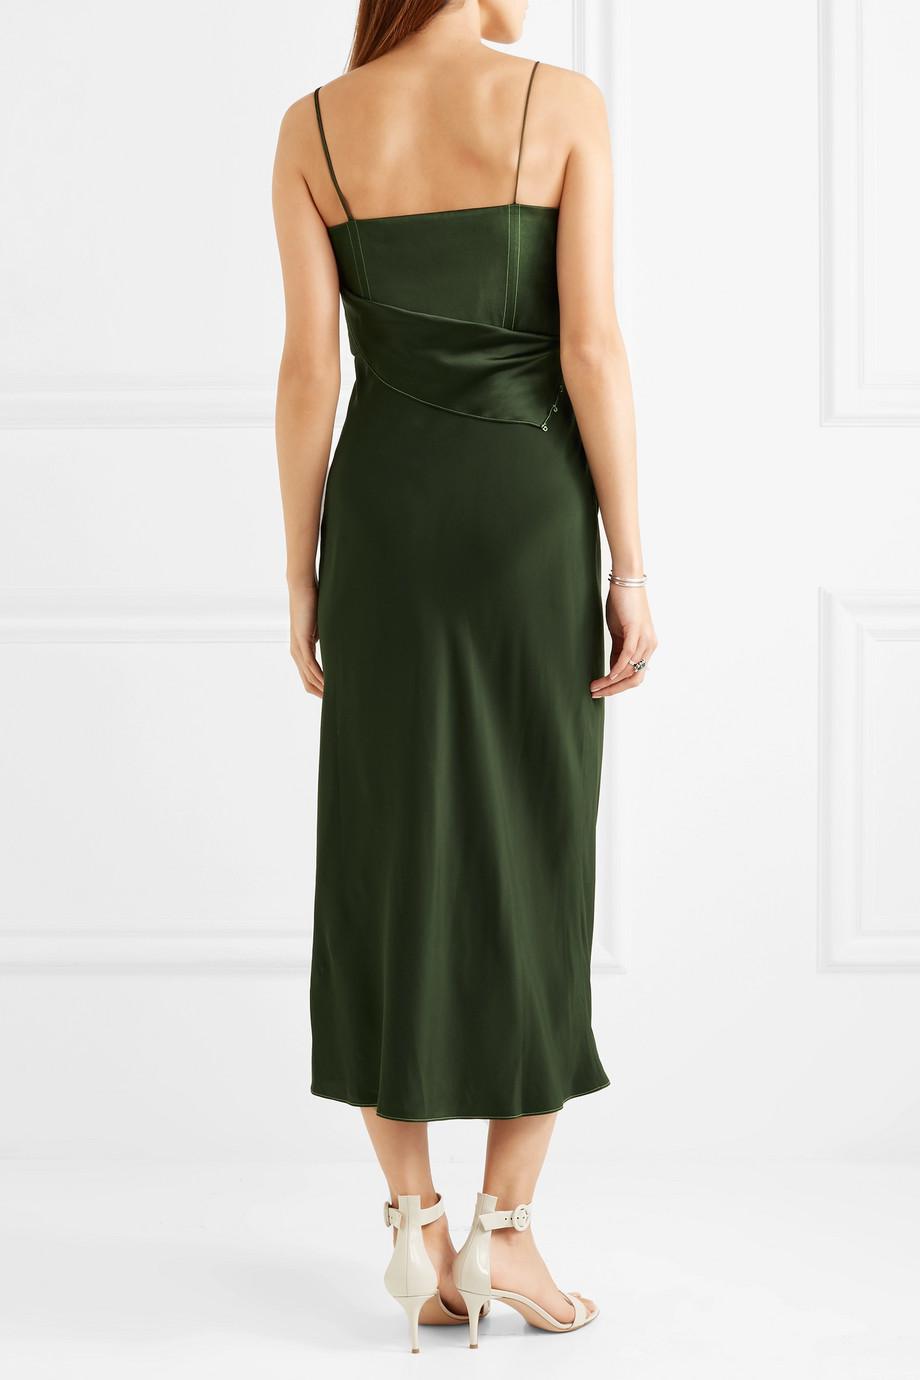 Lyst - Topshop Unique Silk-satin Midi Dress in Green